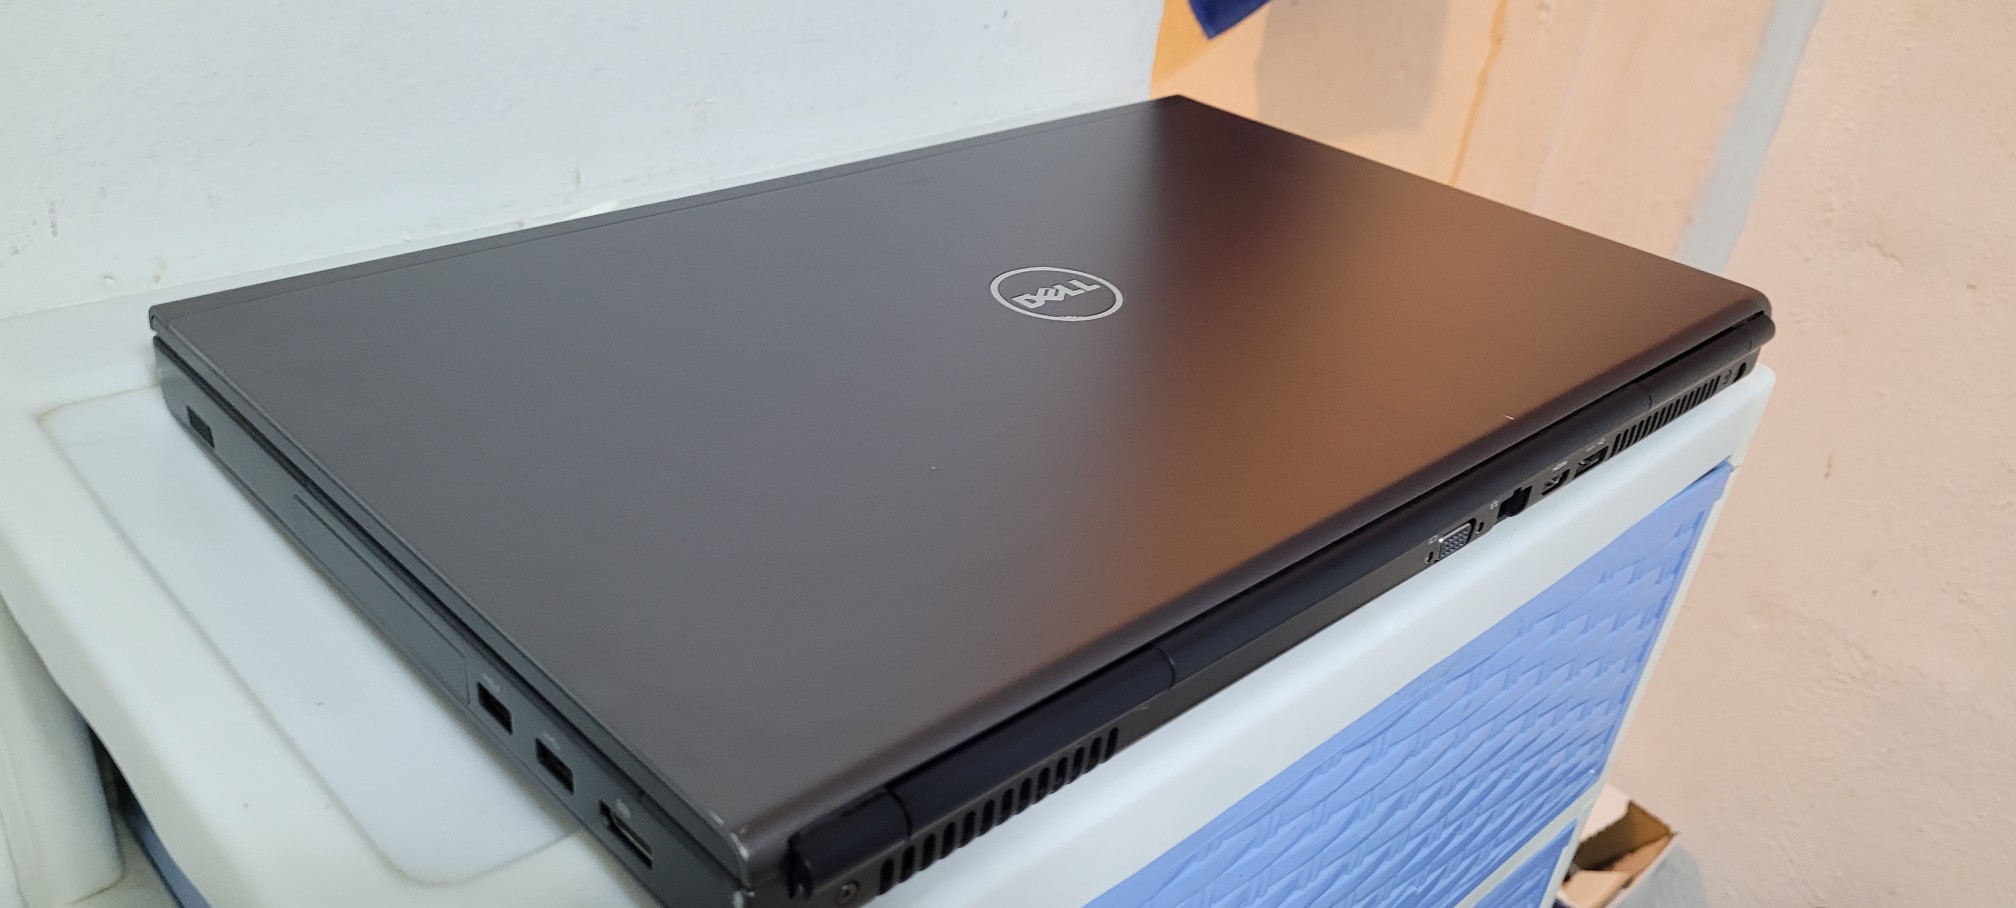 computadoras y laptops - Dell m6700 17 Pulg Core i7 Ram 16gb Disco 500gb SSD Nvidea 4gb Dedicada 2